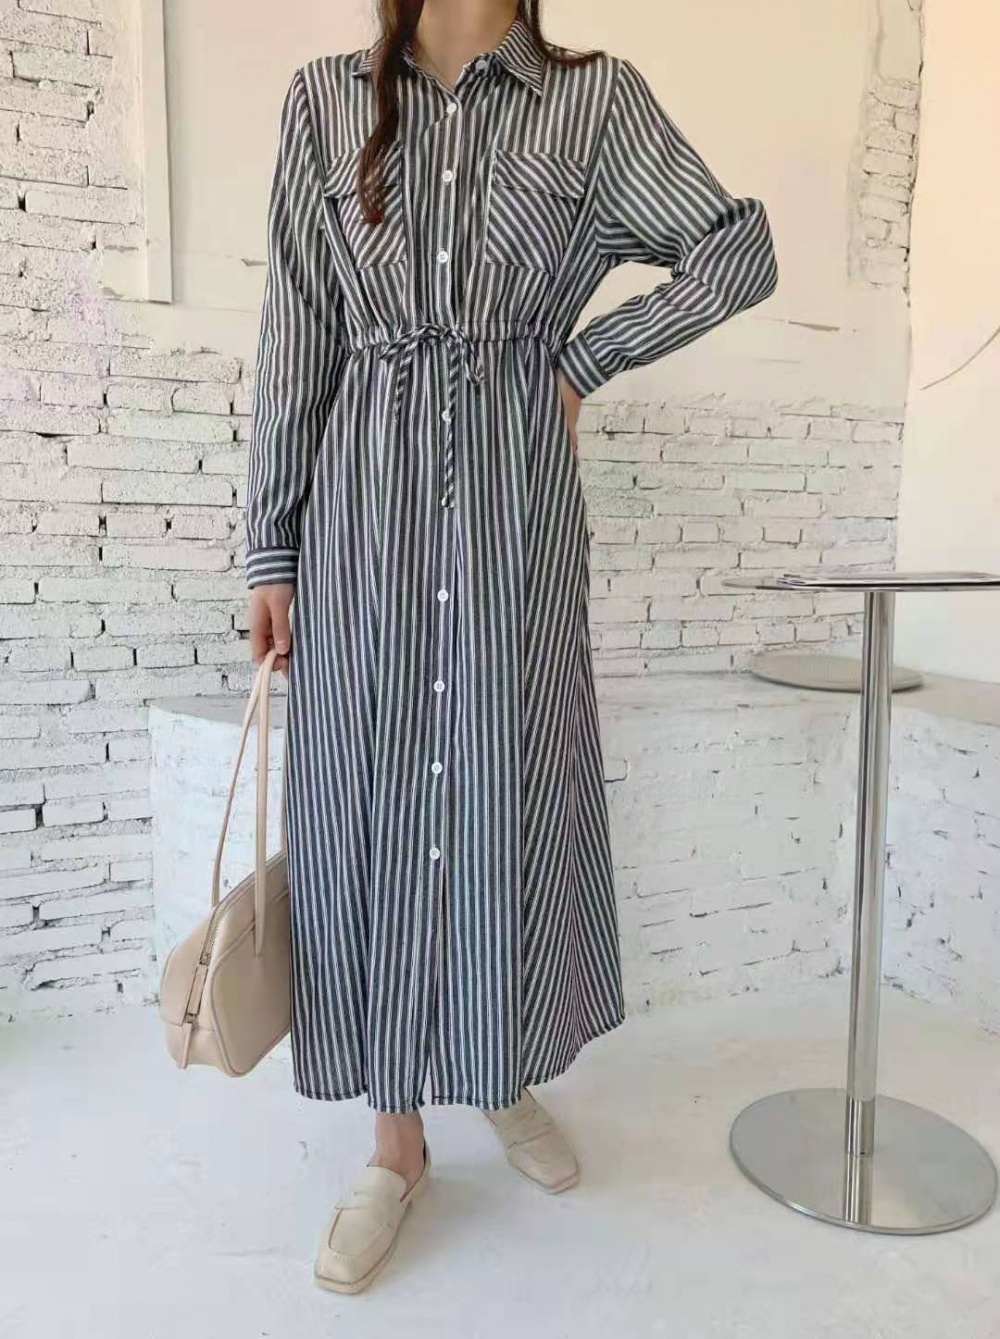 Drawstring cotton linen stripe slim Korean style dress